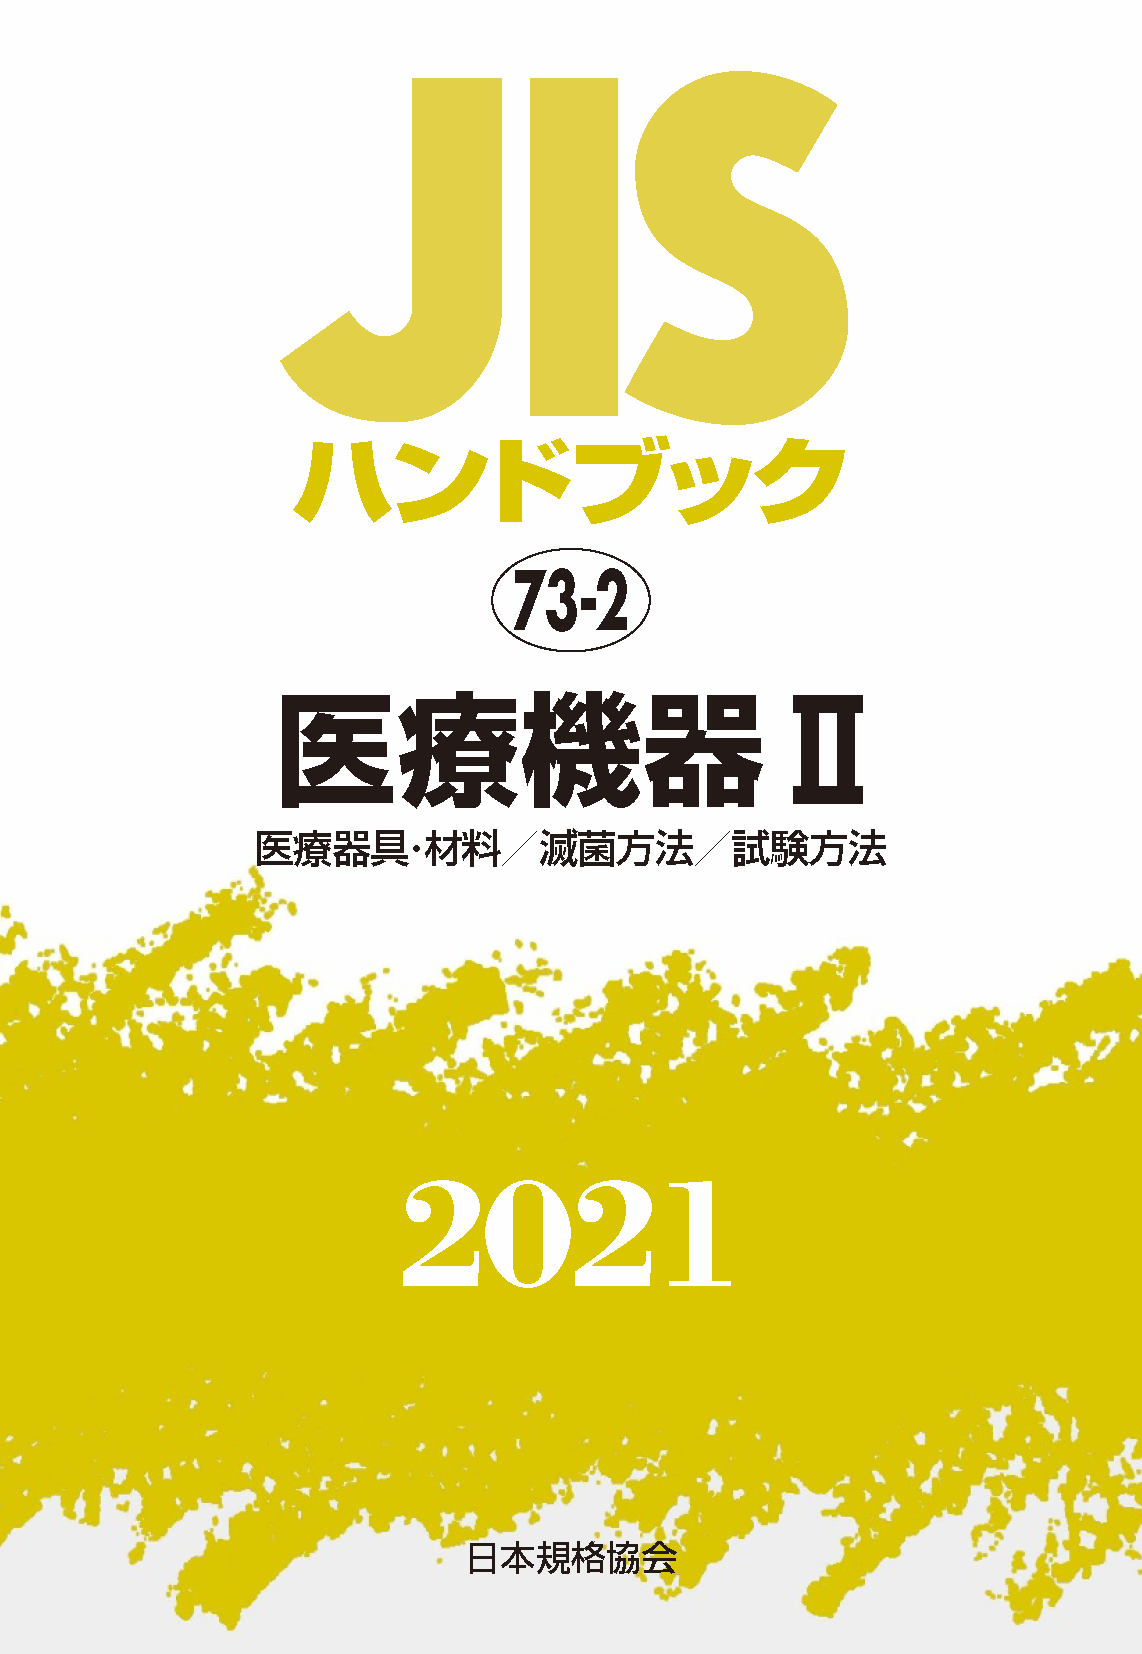 JIS HB 73-2 医療機器 II 2021 | 日本規格協会 JSA Group Webdesk